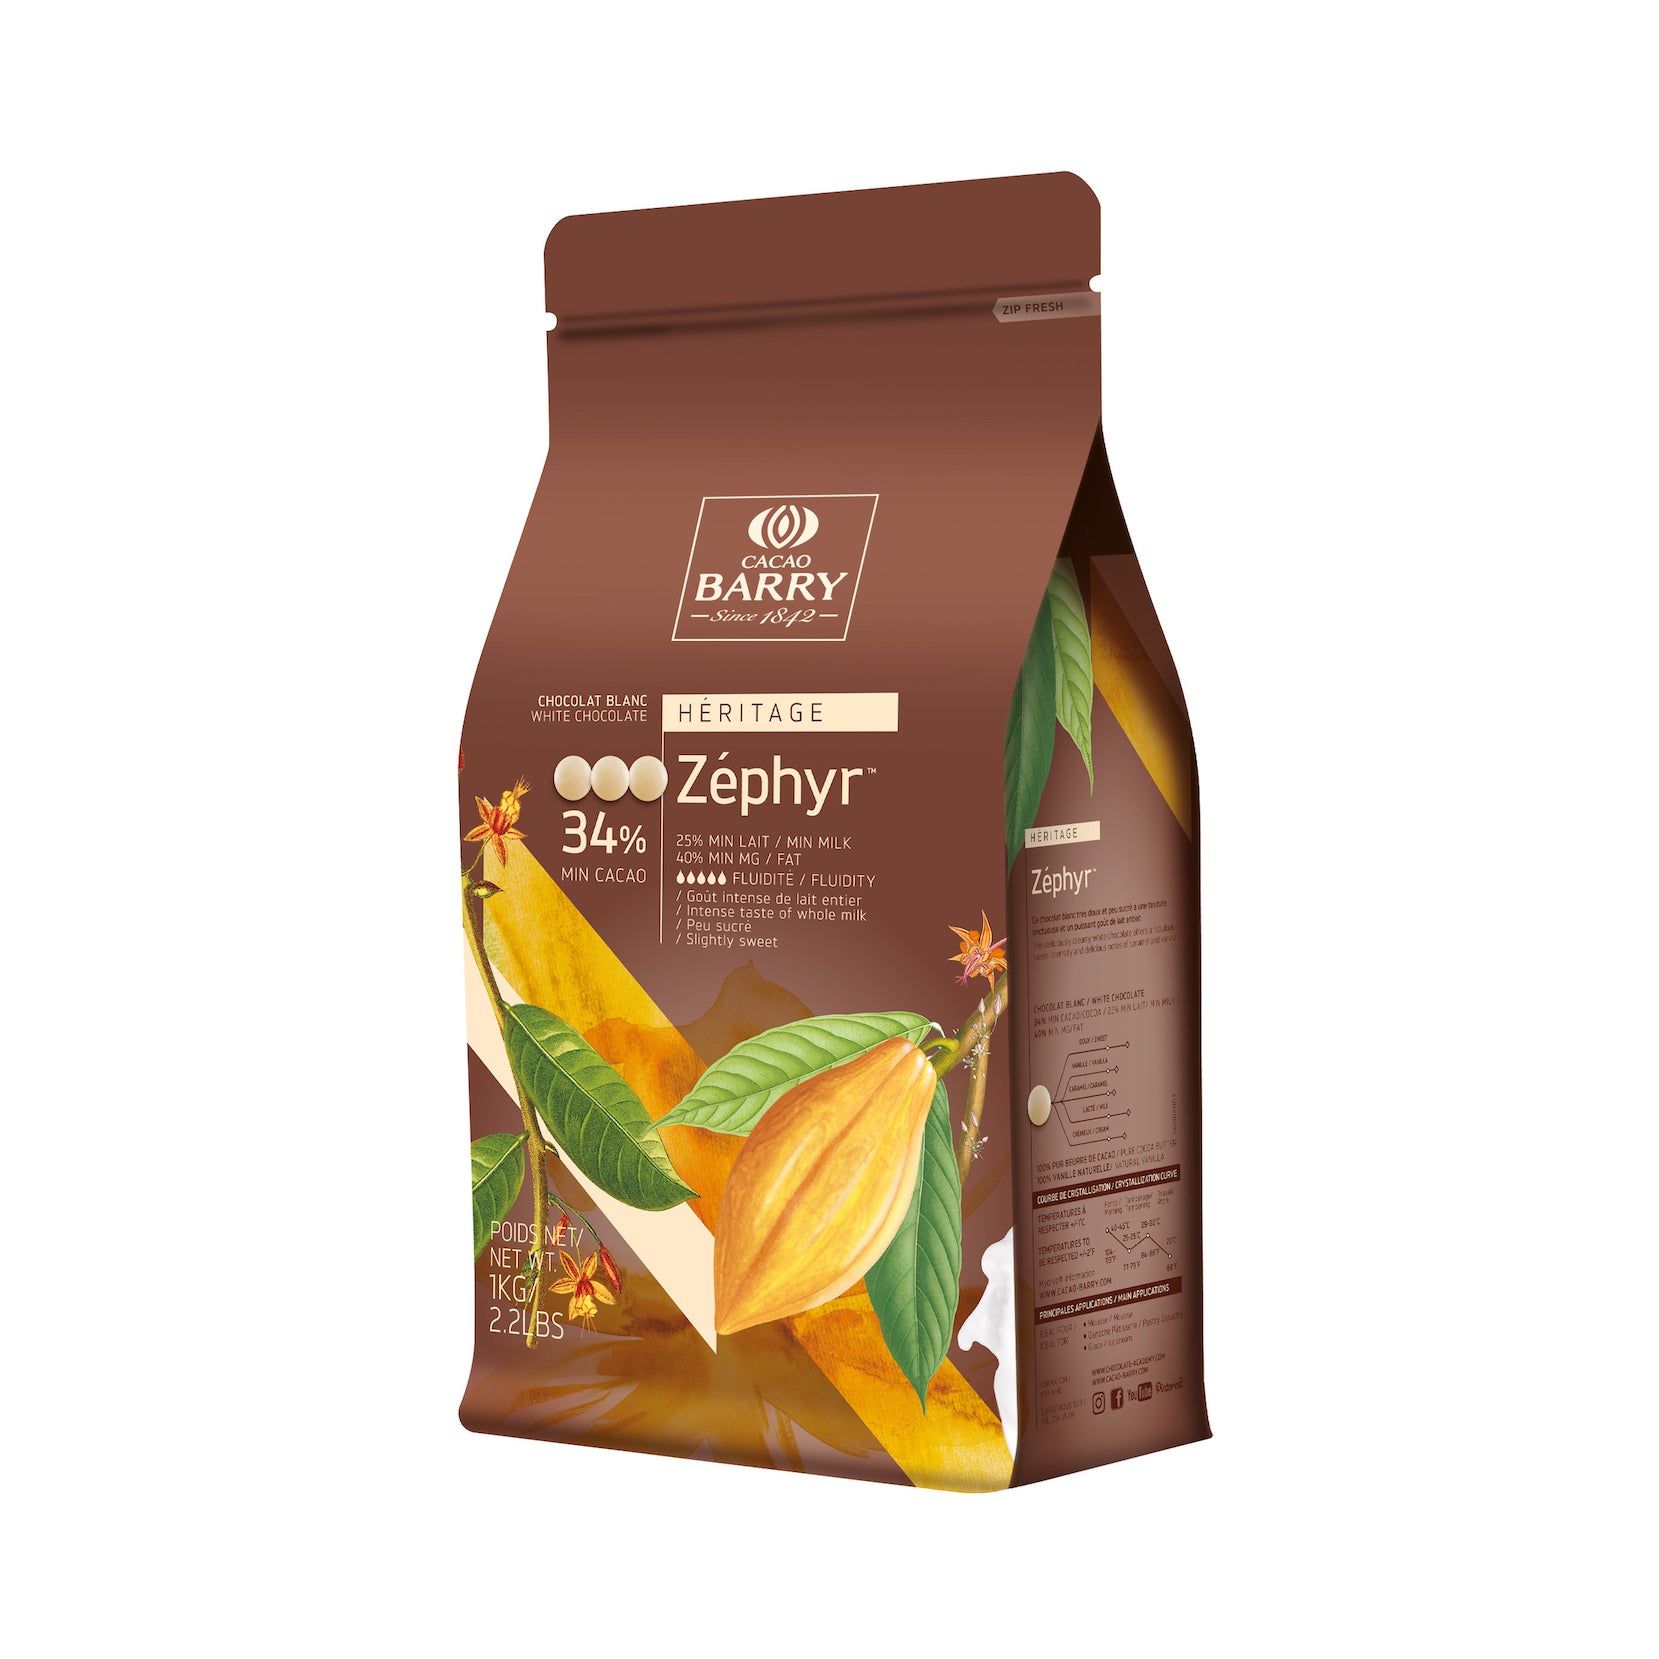 Cacao Barry Chocolate